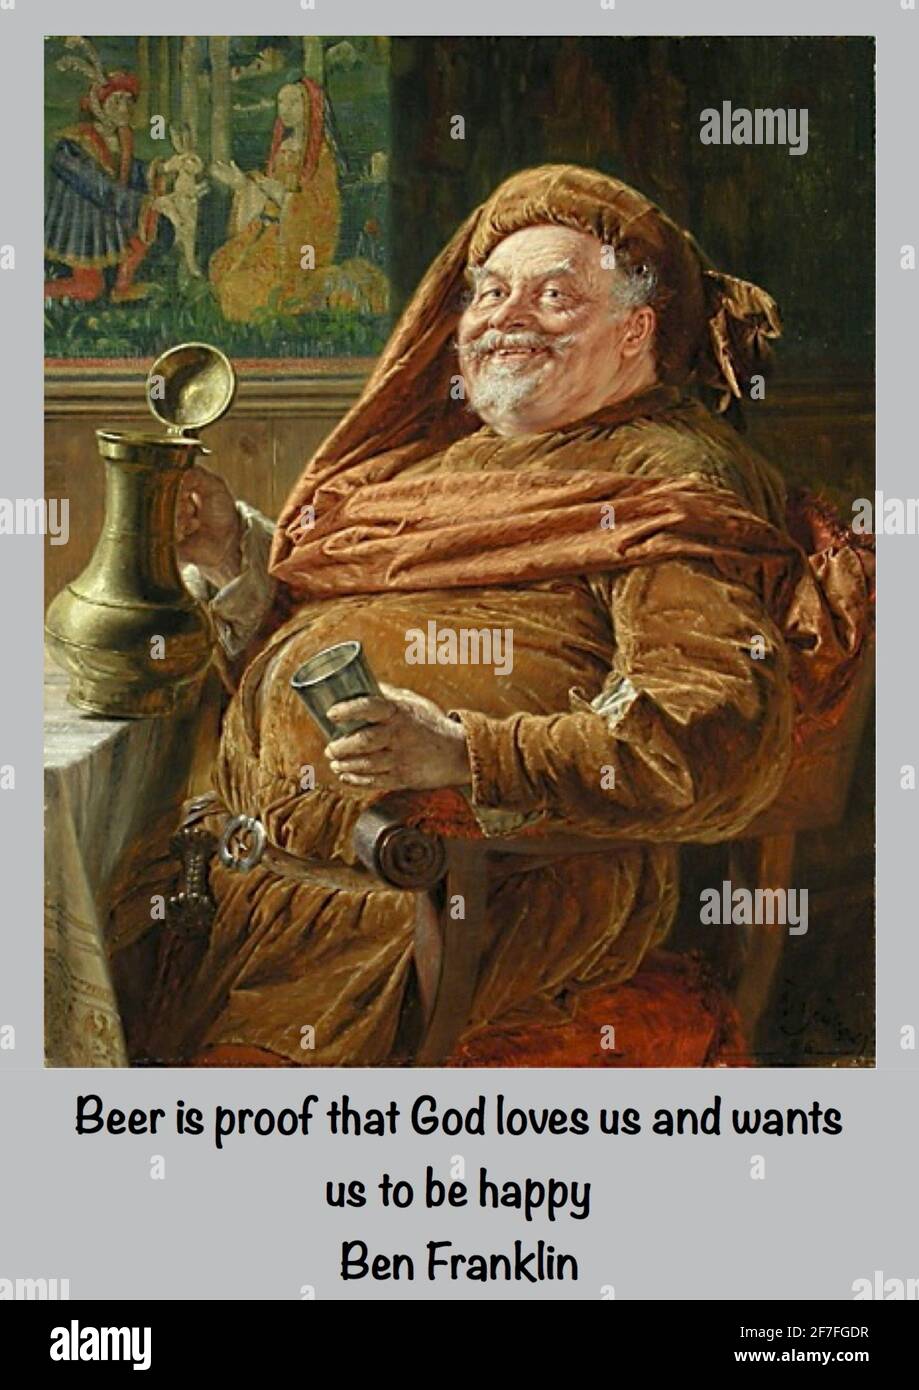 Eduard von Grützner artwork entitled Falstaff. William Shakespeare's larger than life character enjoying a drink or two. Stock Photo